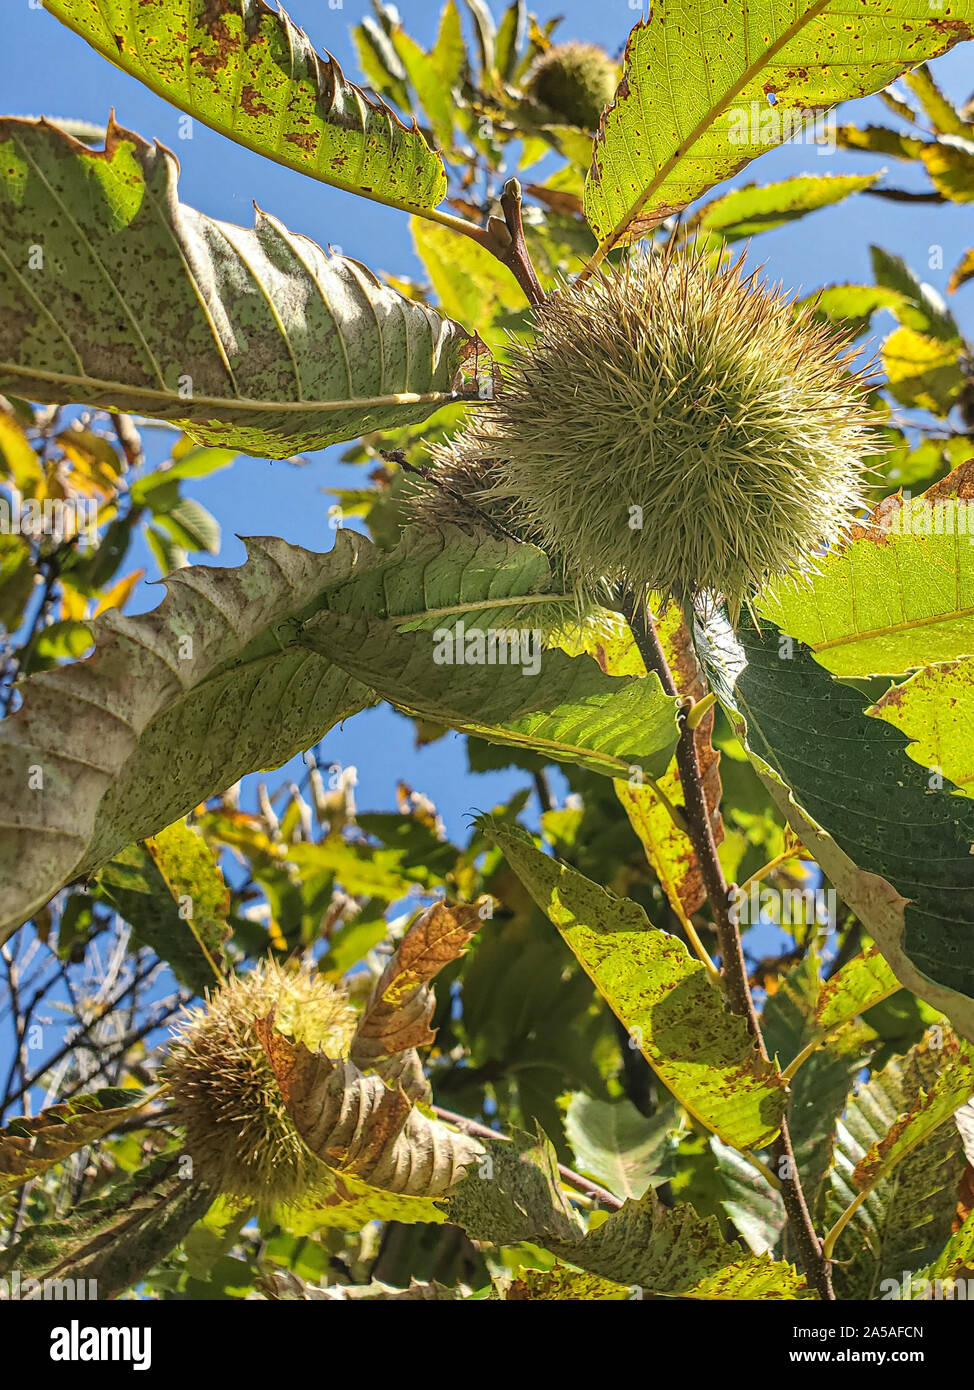 Wild Chestnut tree on natural scenery, autumnal seasonal food ingredients  Stock Photo